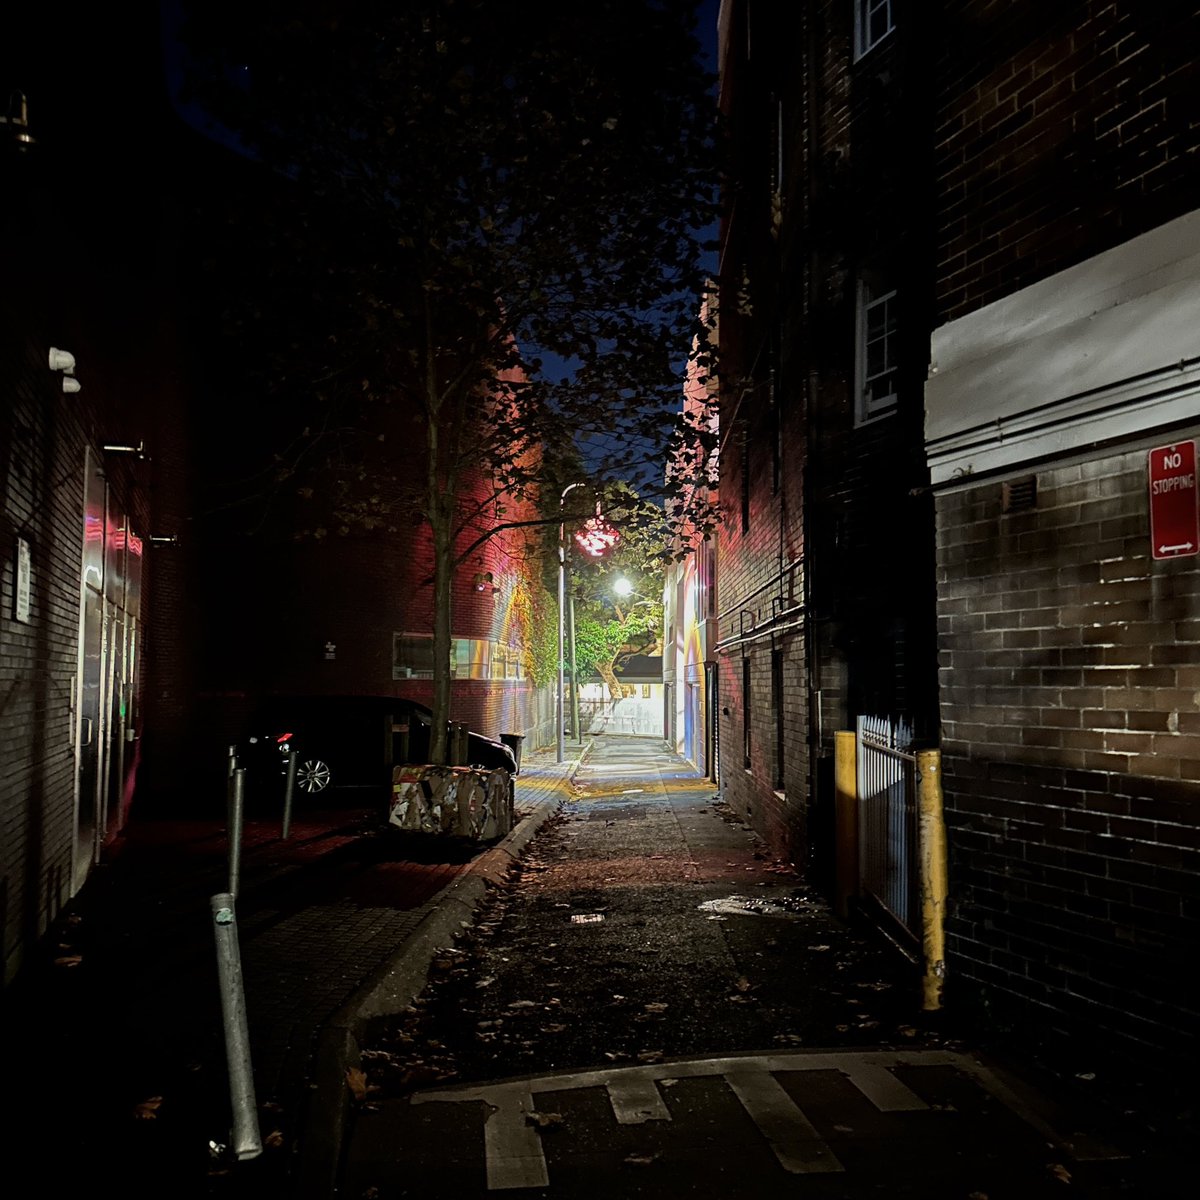 Roaming the streets of Sydney at night. 
#MattiDoingArt #streetphotography #streetfeat #allstreetshots #city #ilovesydney #sydney #sydneylocal #sydneylife #landscape #landscapephotography #iphonography #aussiestreetphotography #sydneystreets #sydneyatnight #night #streetsatnight